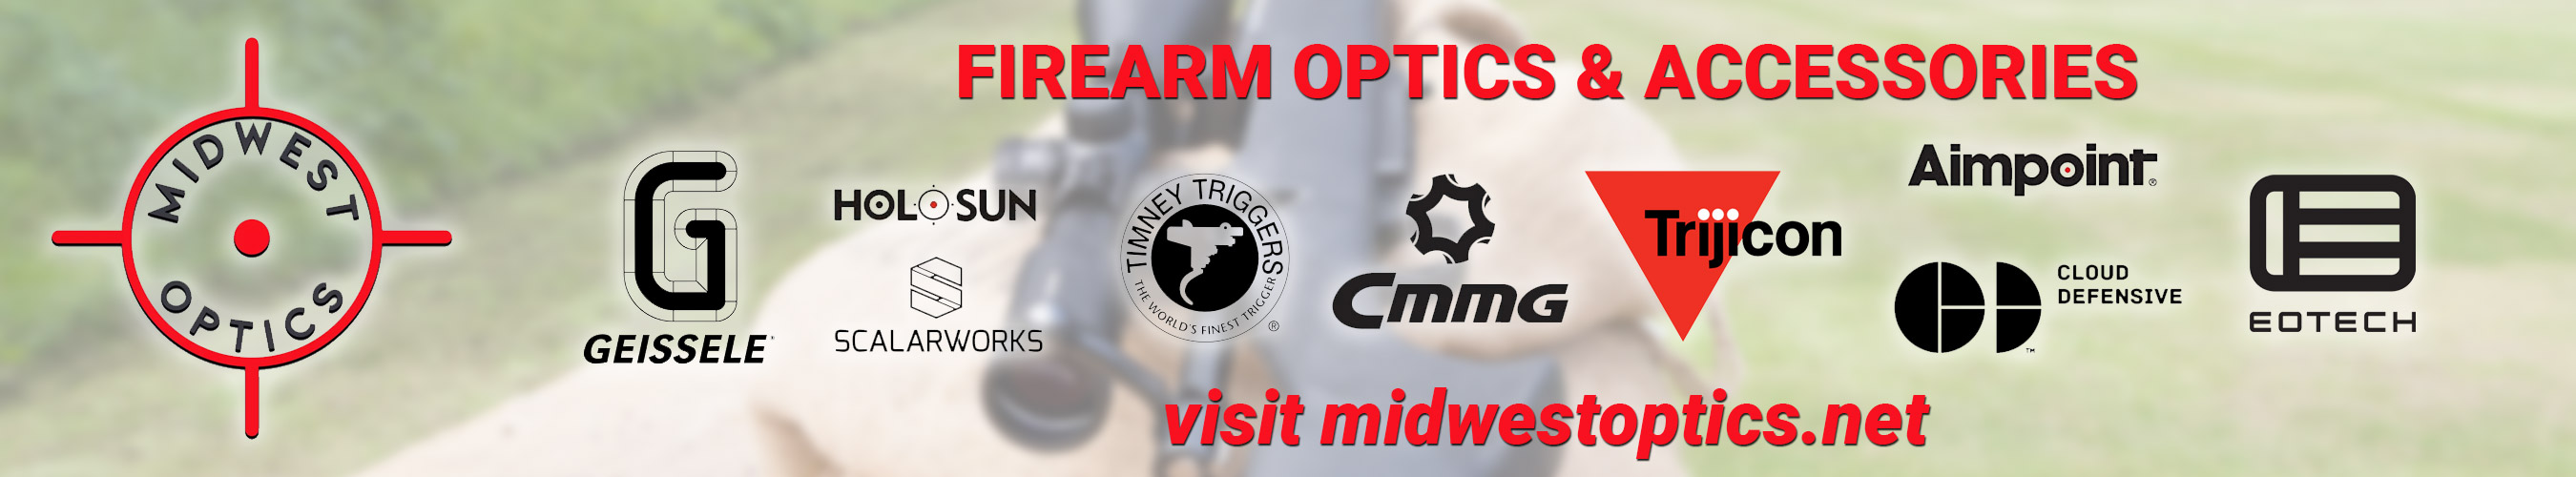 Midwest Optics